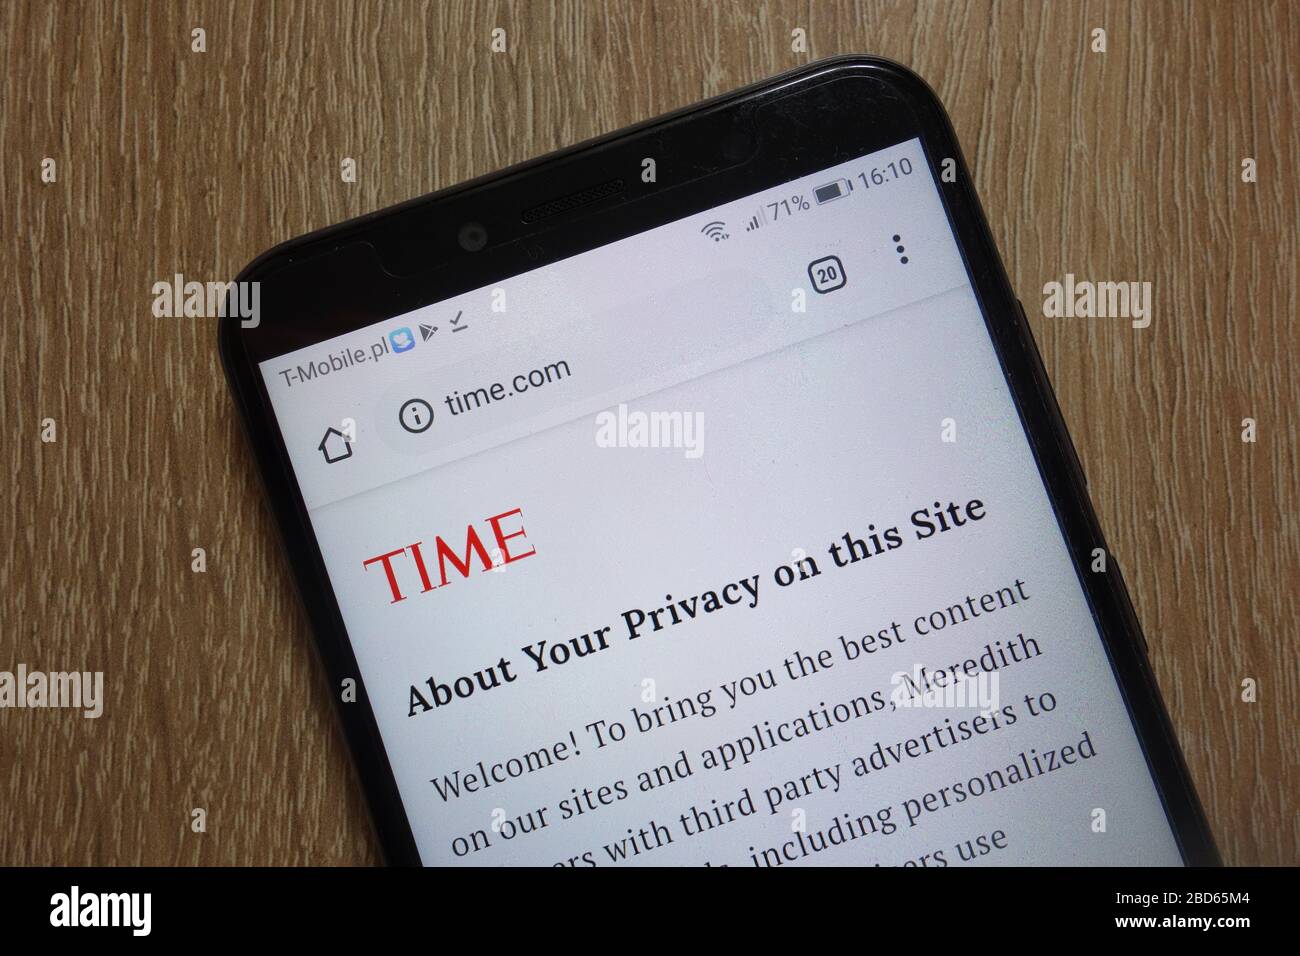 Time magazine website (time.com) displayed on smartphone Stock Photo